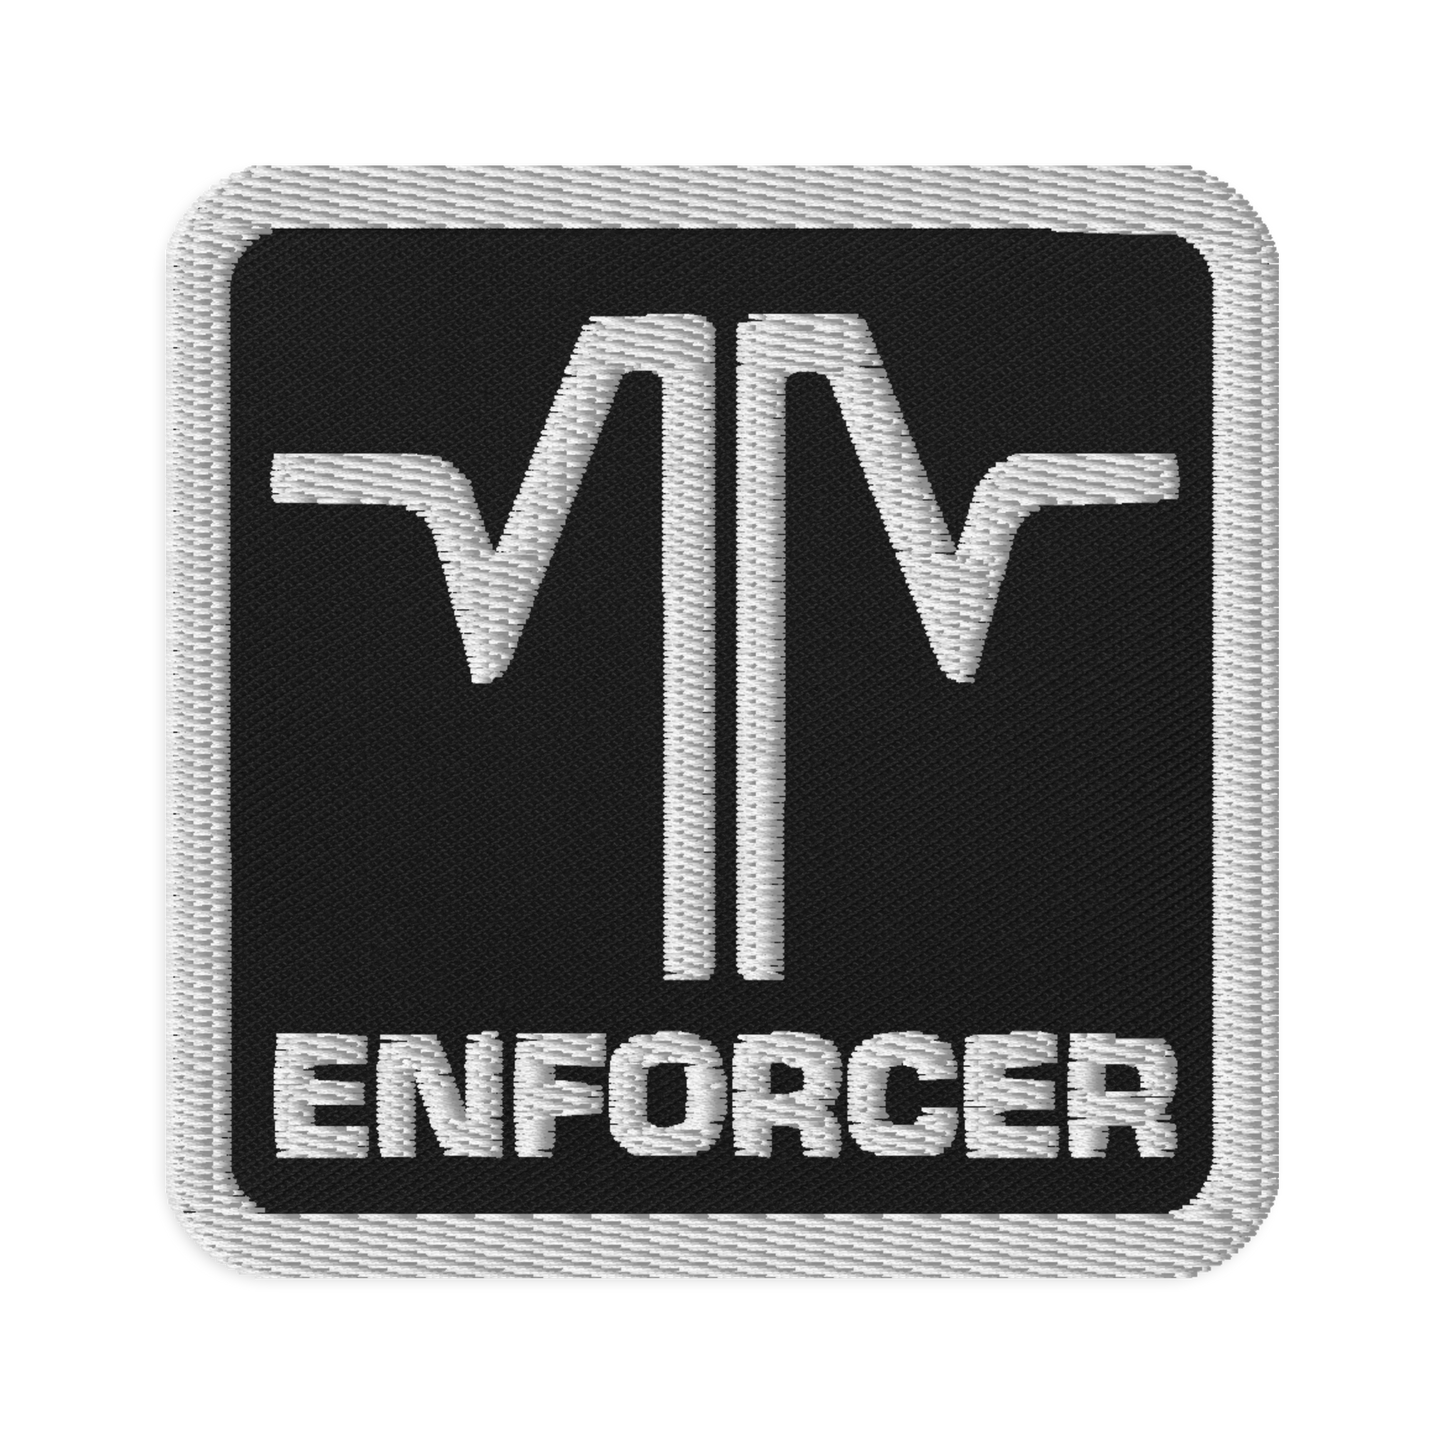 Irving Force ENFORCER patch